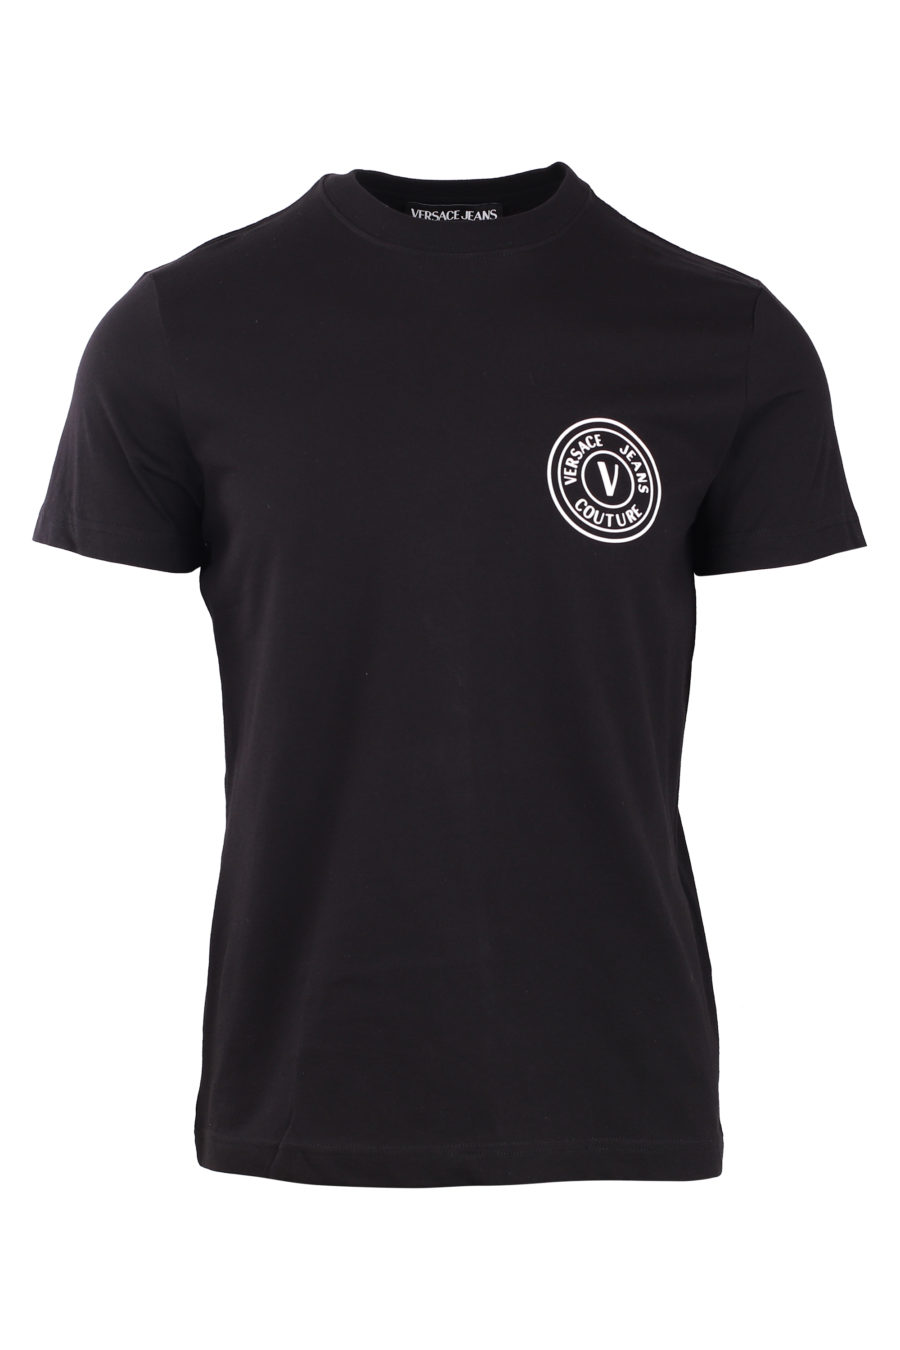 Camiseta negra con logo redondo pequeño - IMG 0779